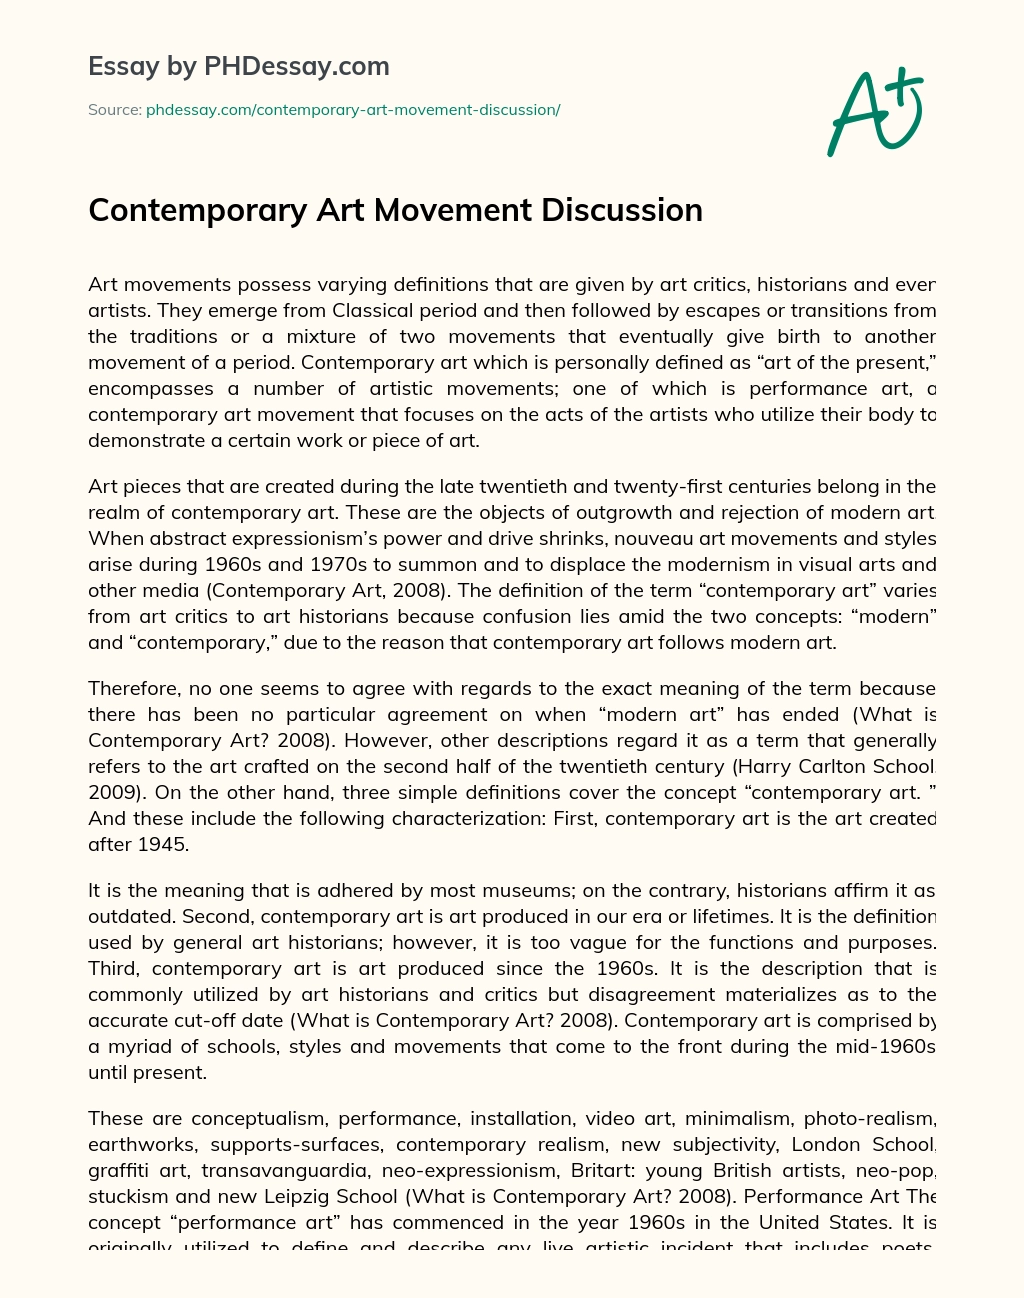 Contemporary Art Movement Discussion essay